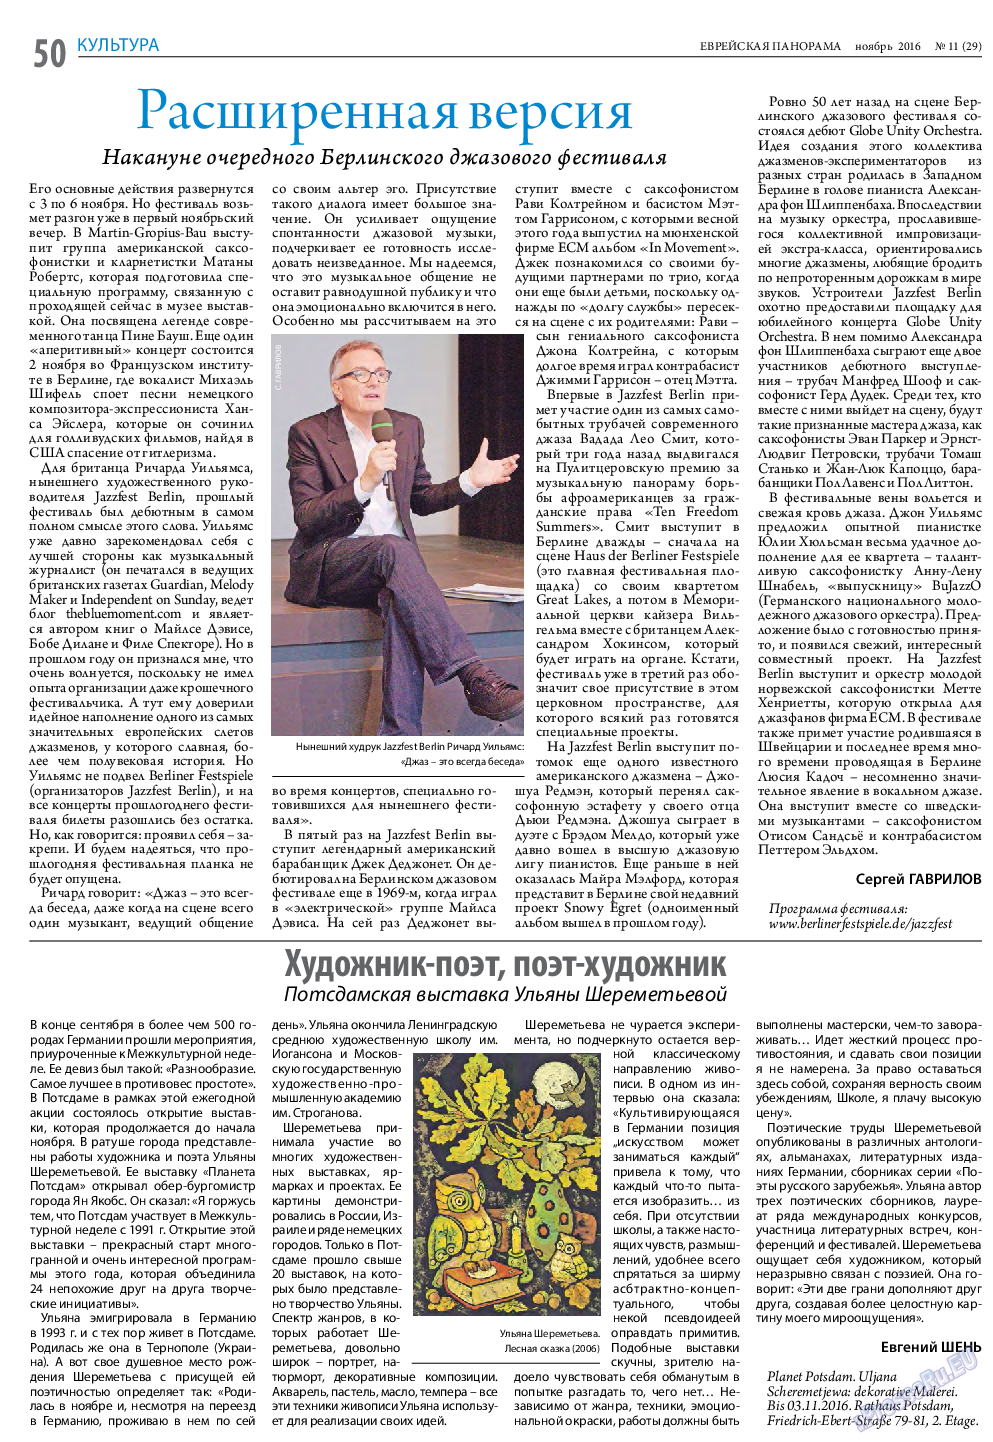 Еврейская панорама, газета. 2016 №11 стр.50